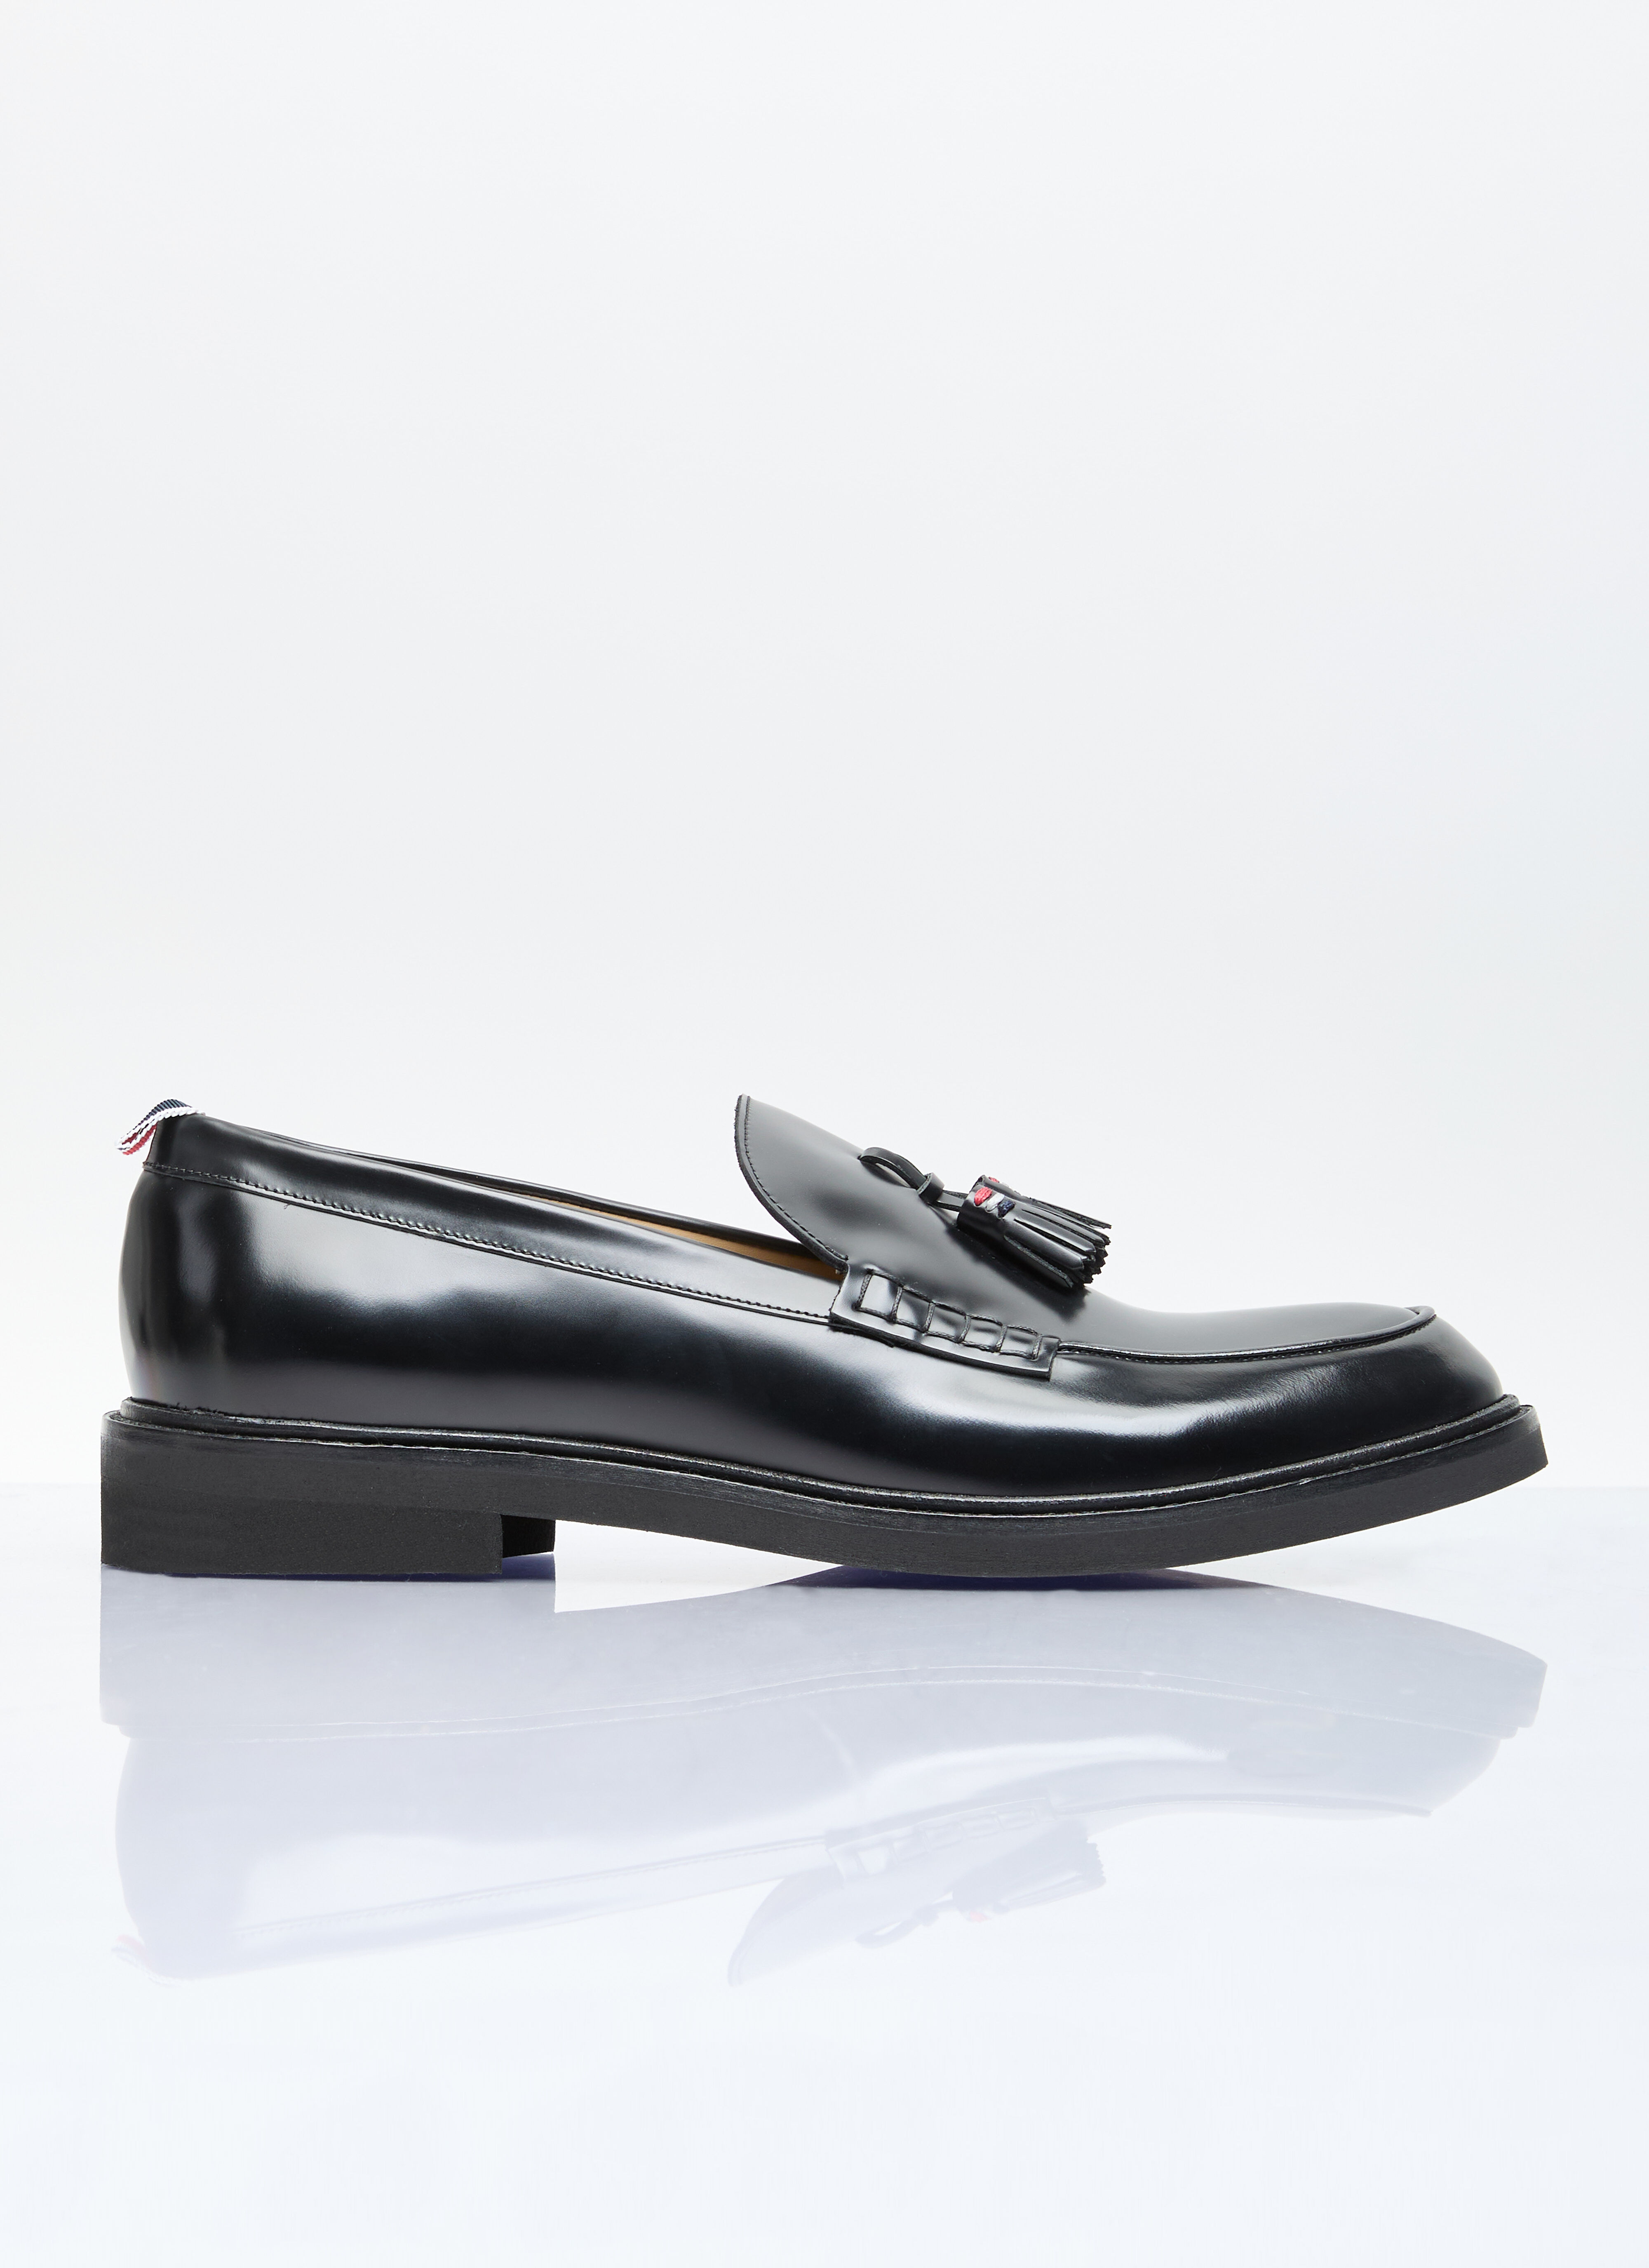 adidas x DINGYUN ZHANG Tassel Loafers Black ady0157001